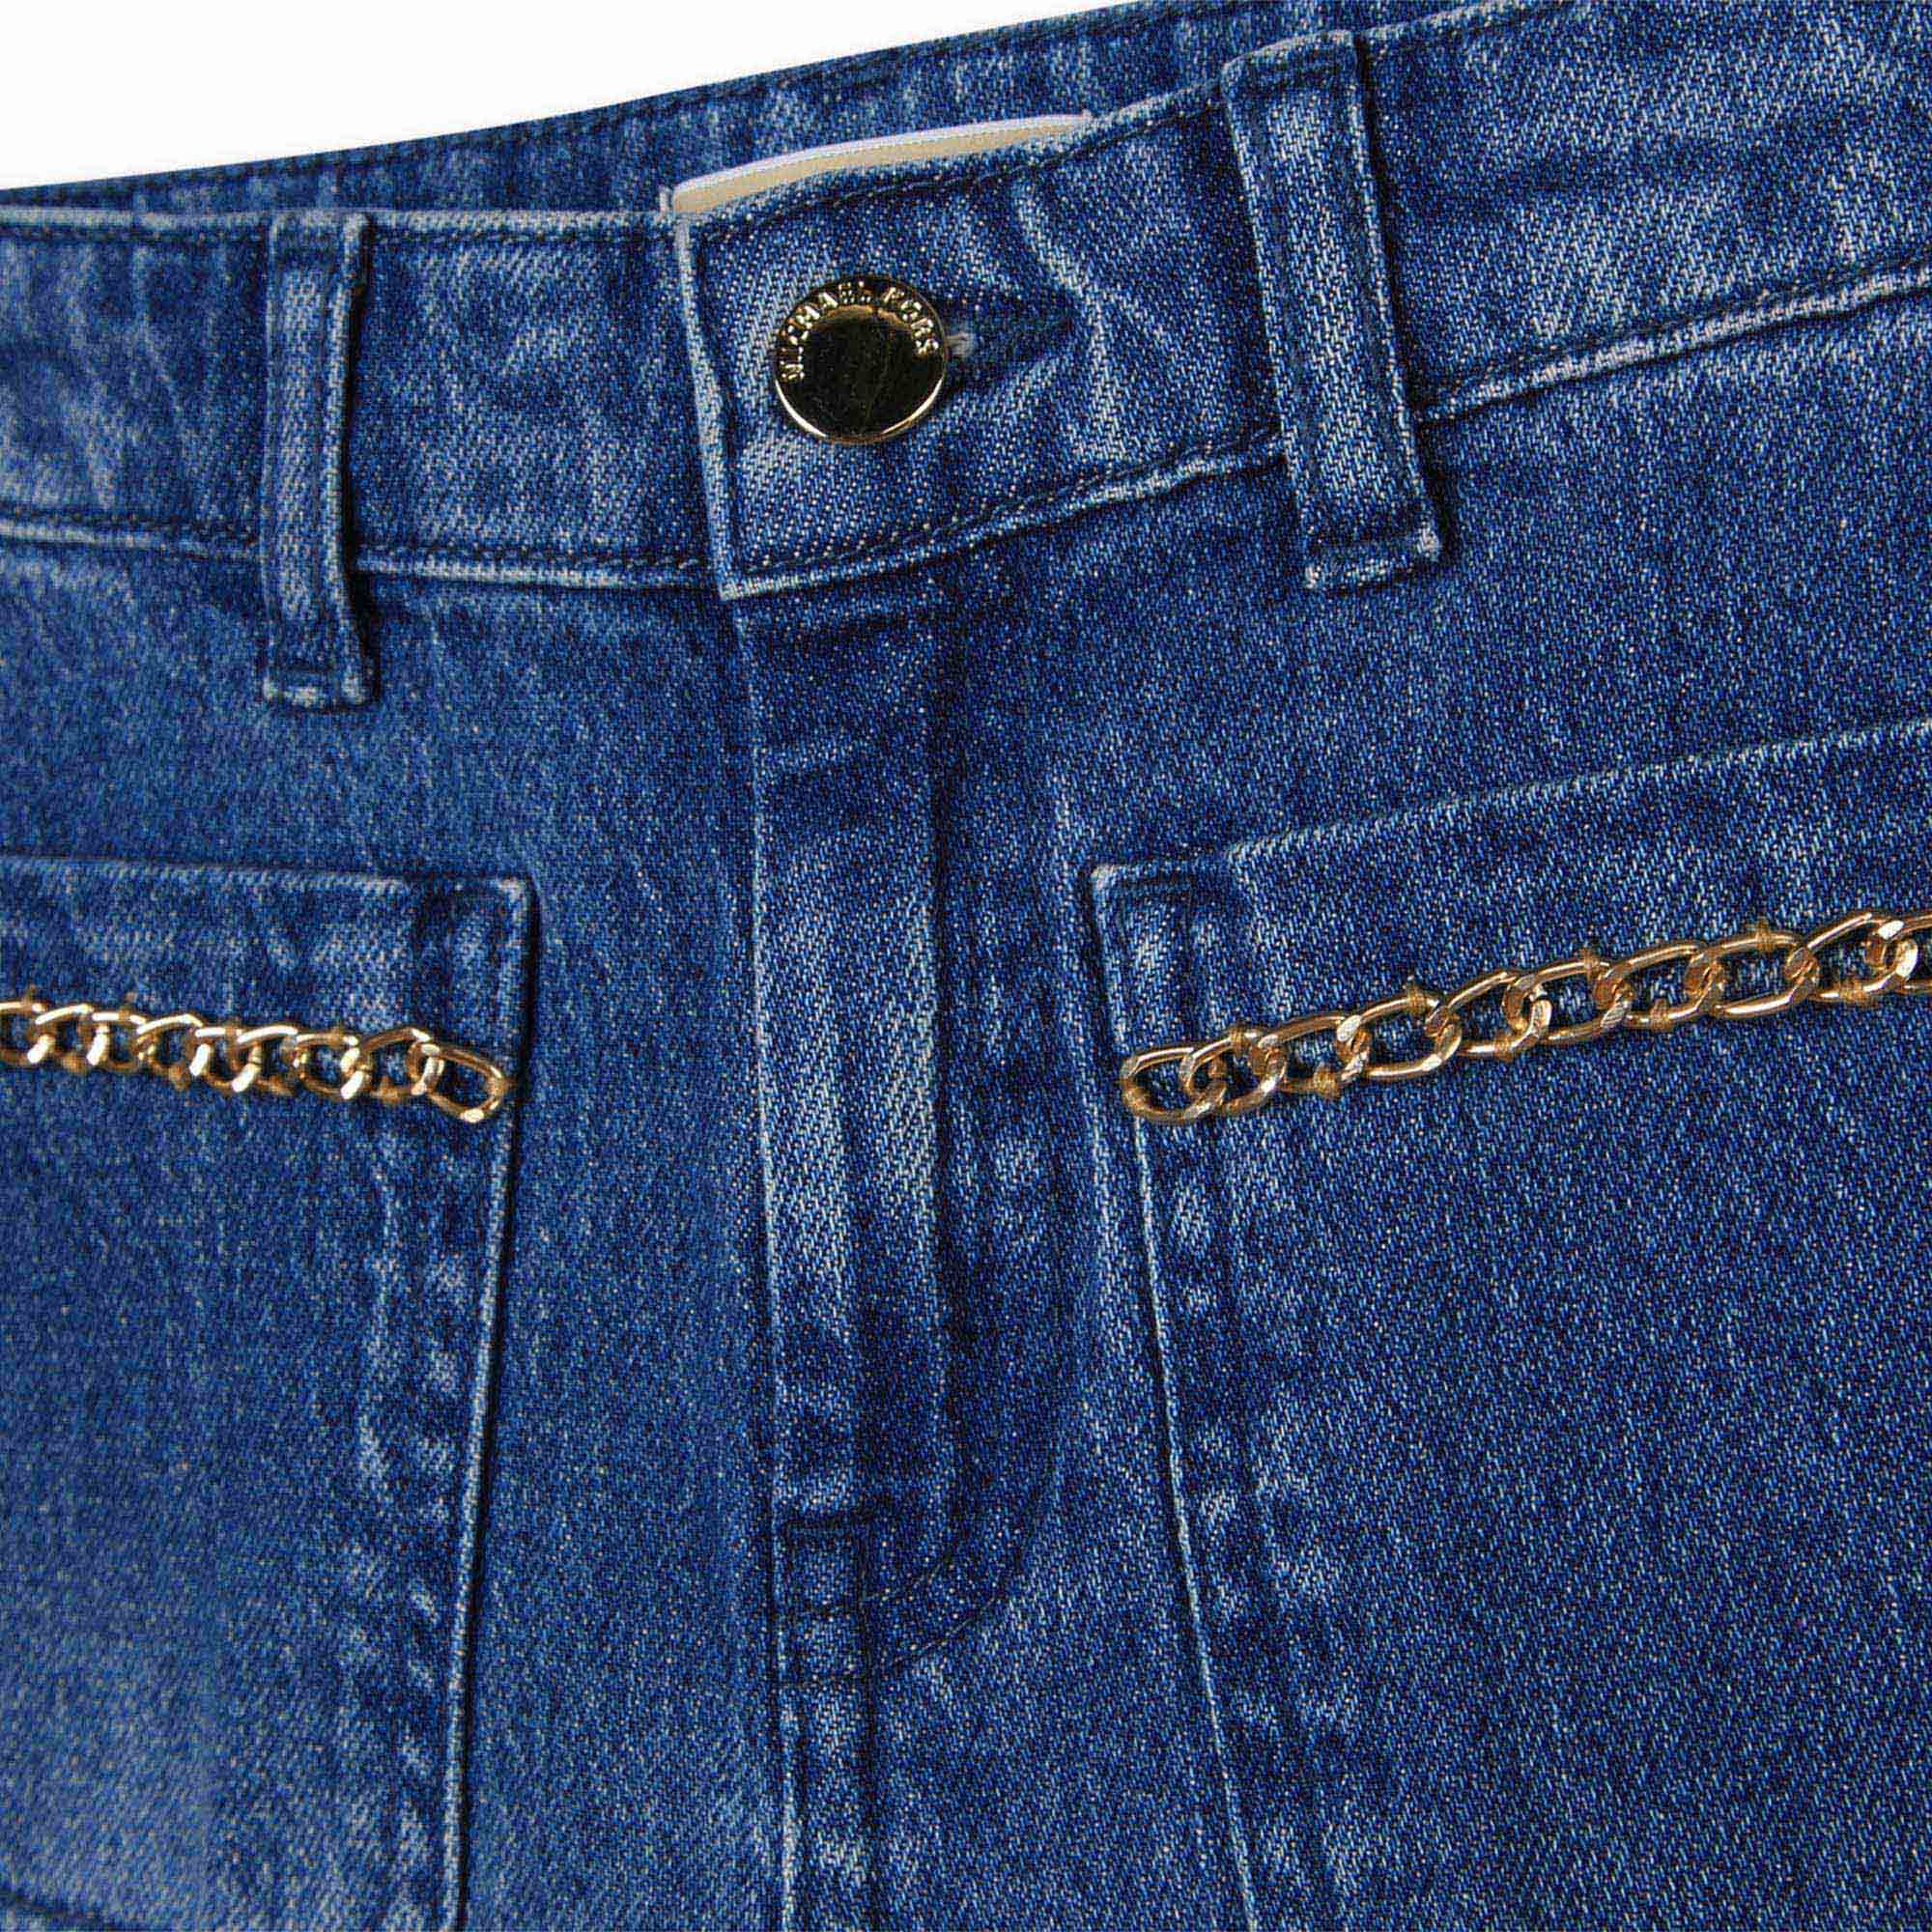 Jeans in cotone MICHAEL KORS Per BAMBINA